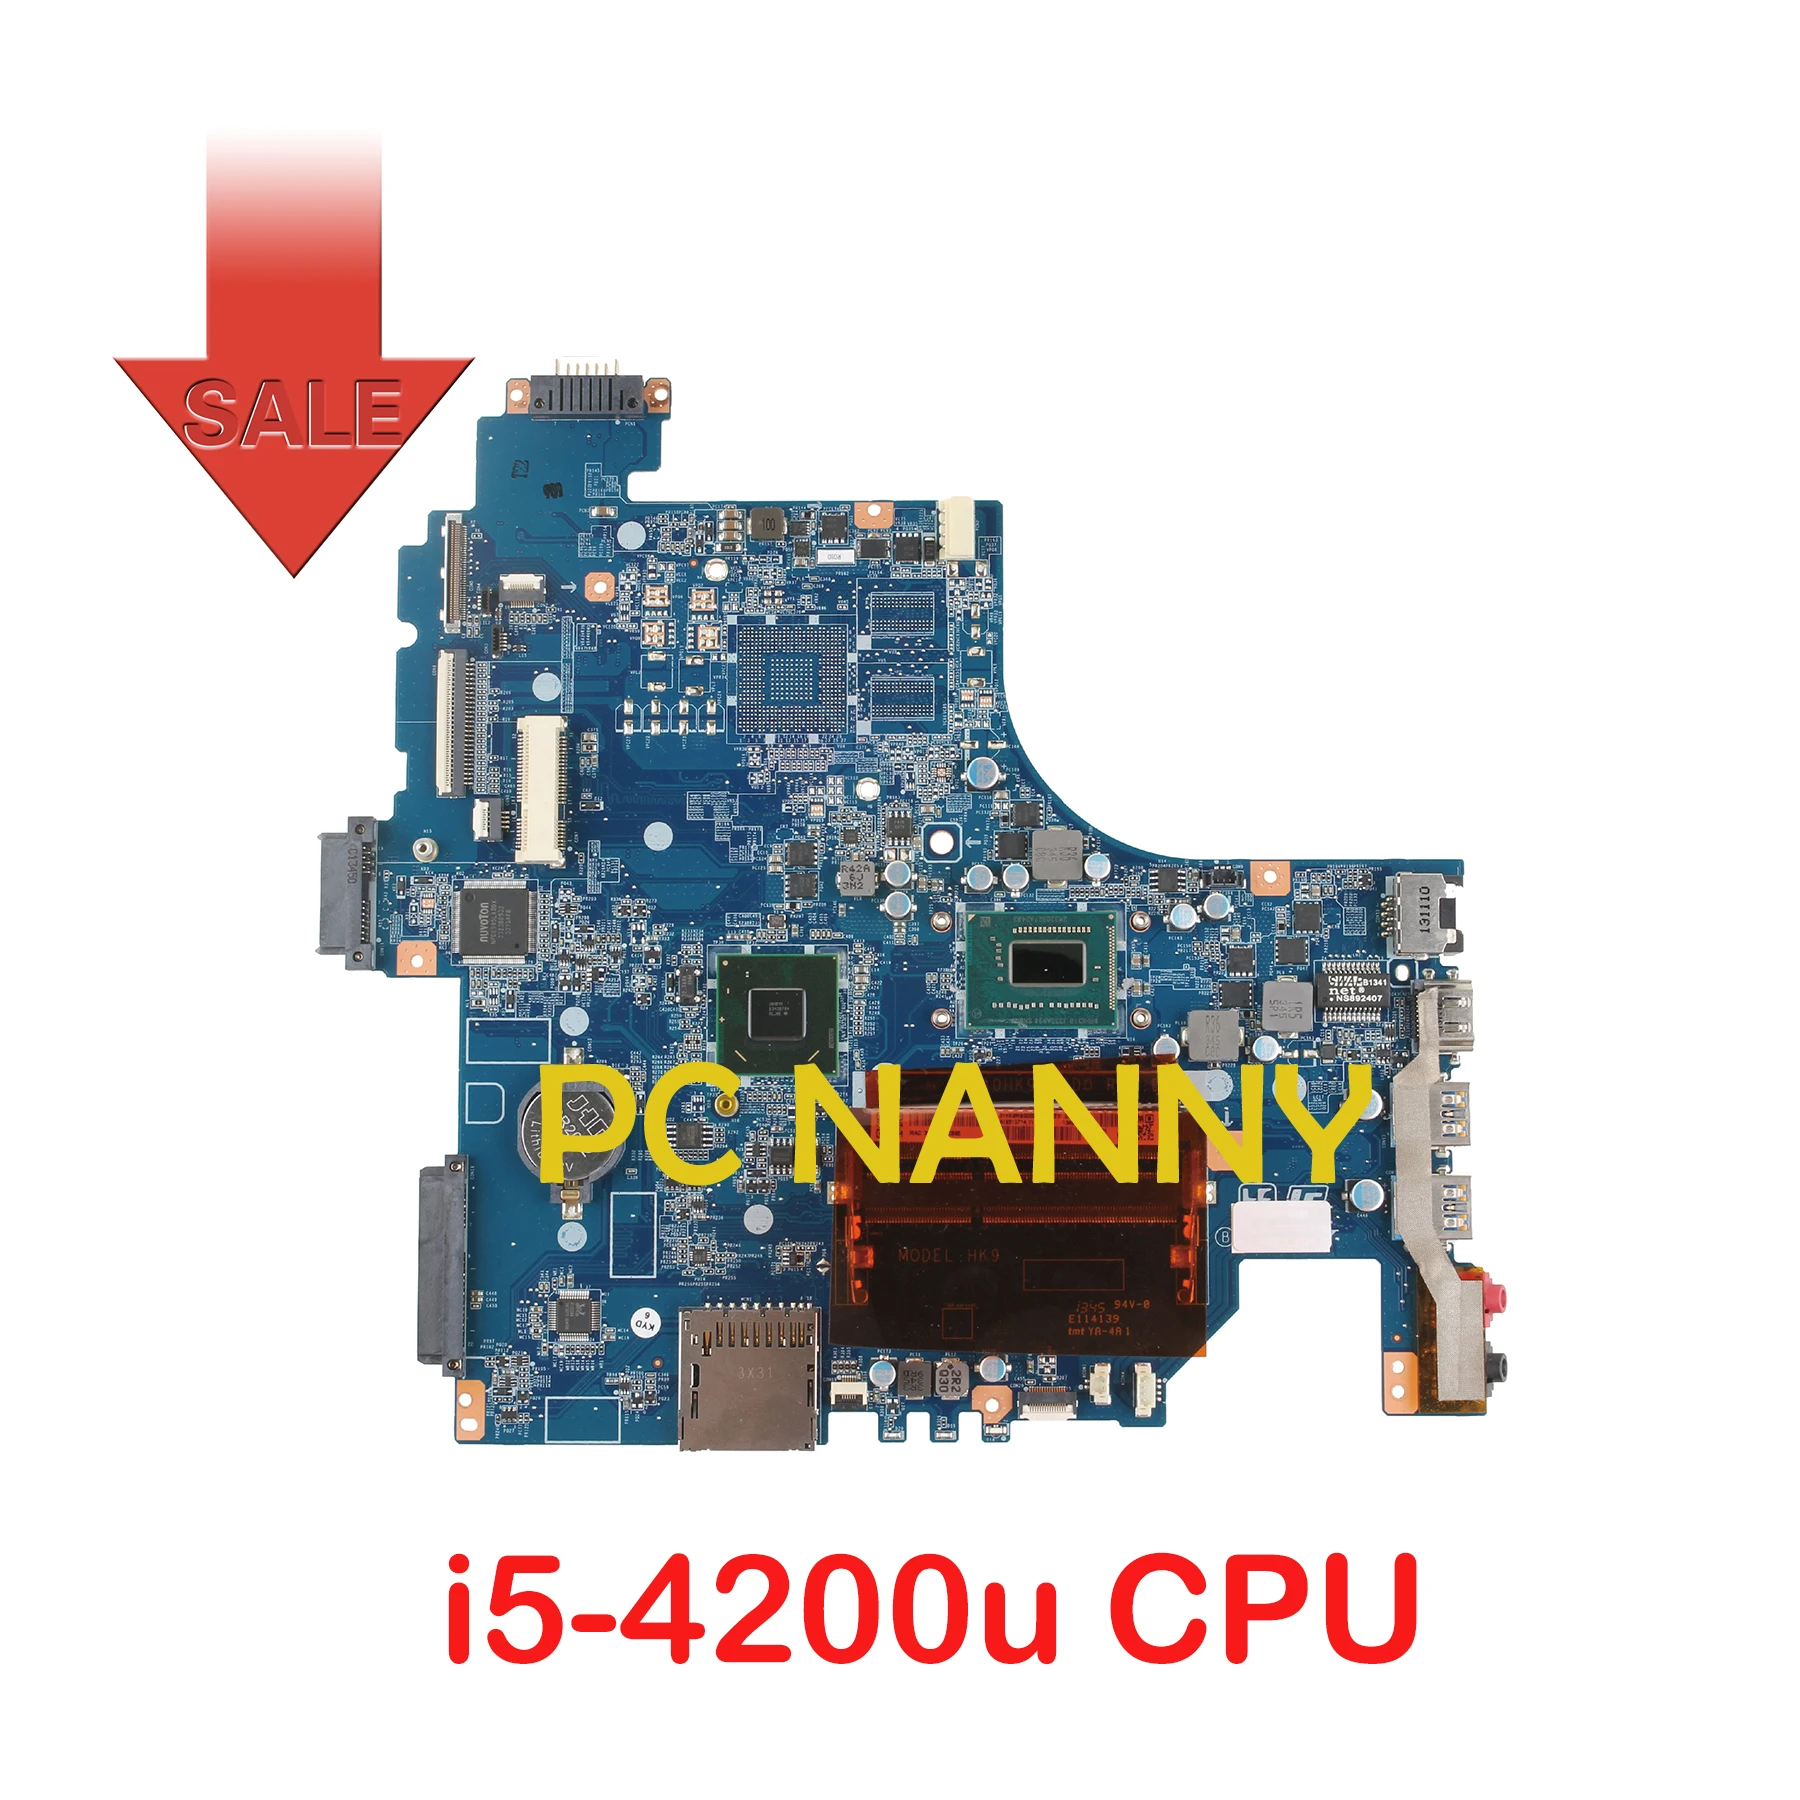   PCNANNY   sony SVF14 SVF143 DA0HKCMB6D0 i5-4200u